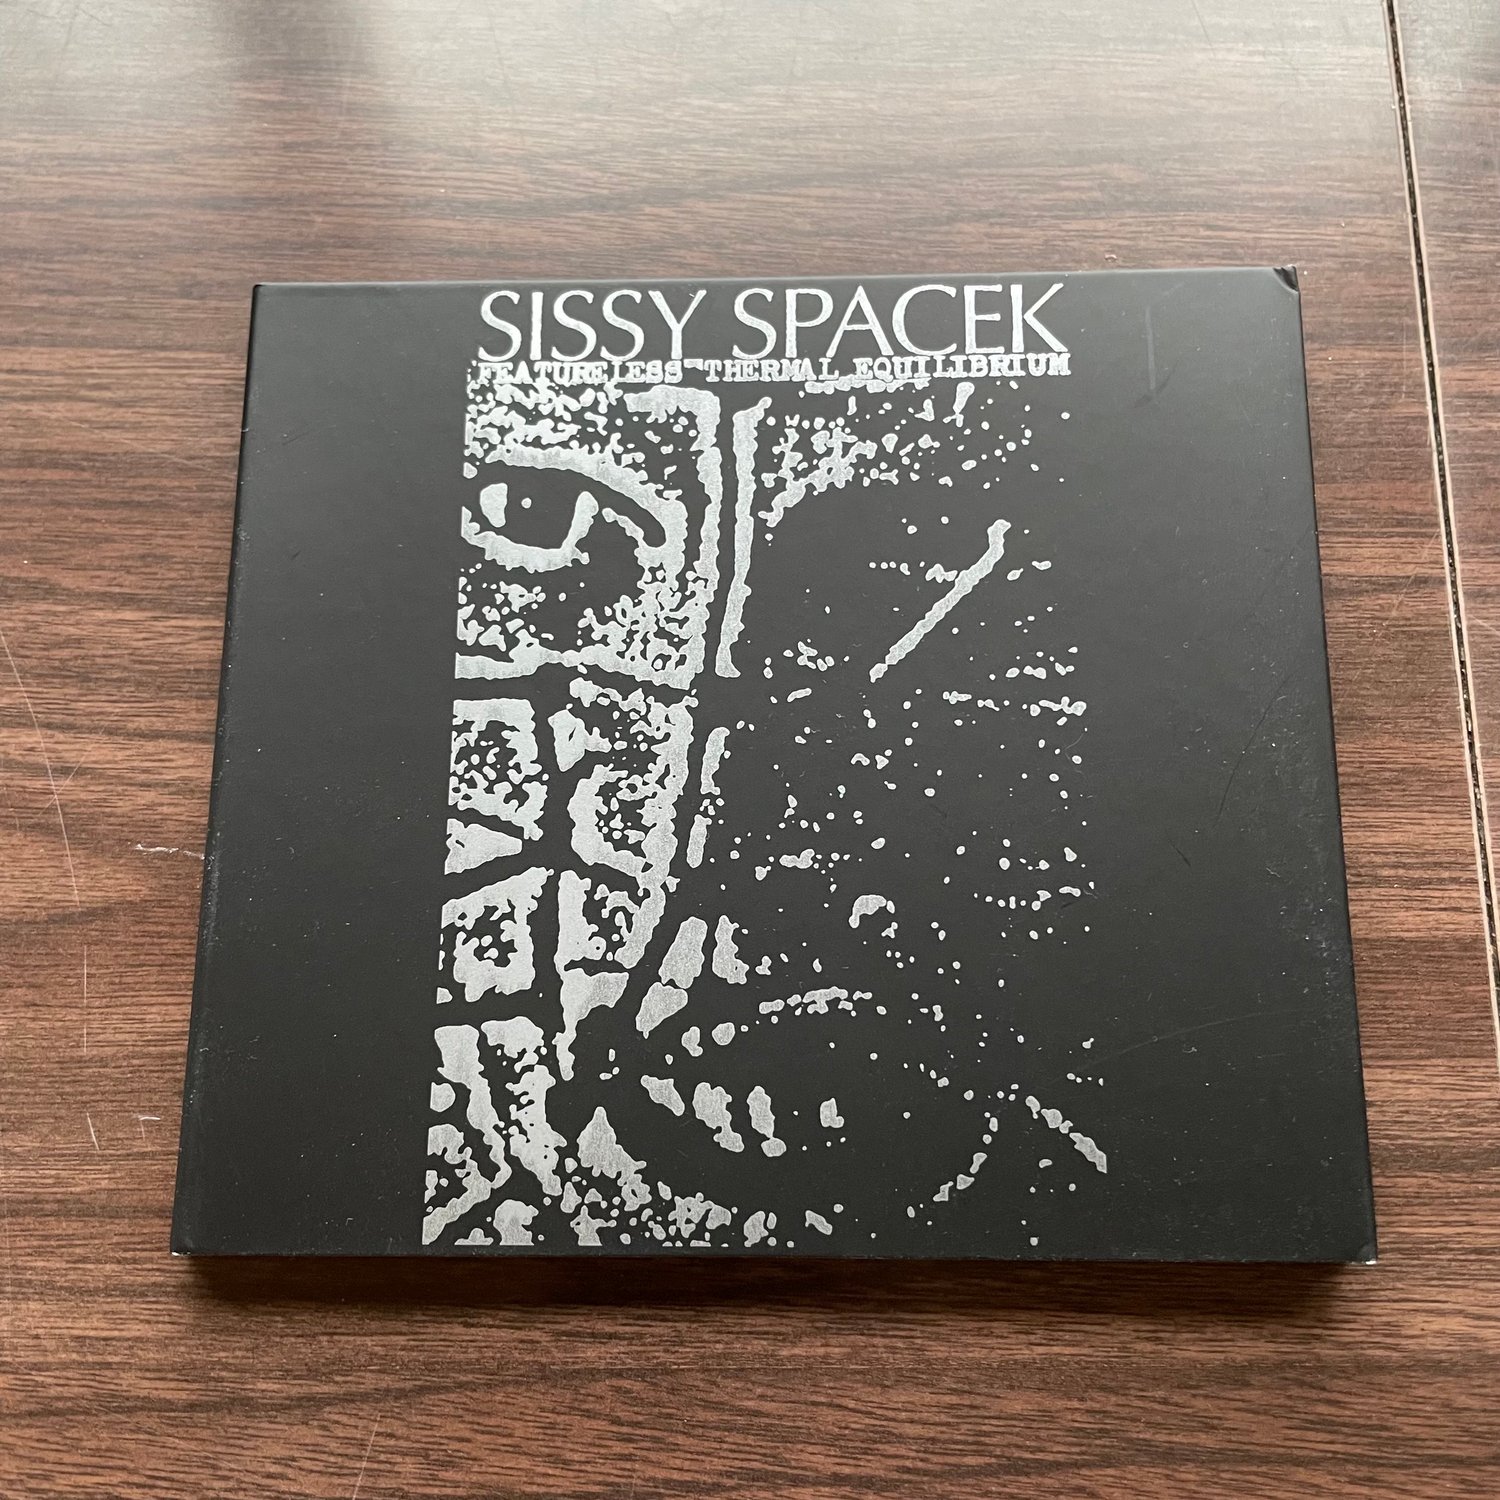 Sissy Spacek - Featureless Thermal Equilibrium (CD)